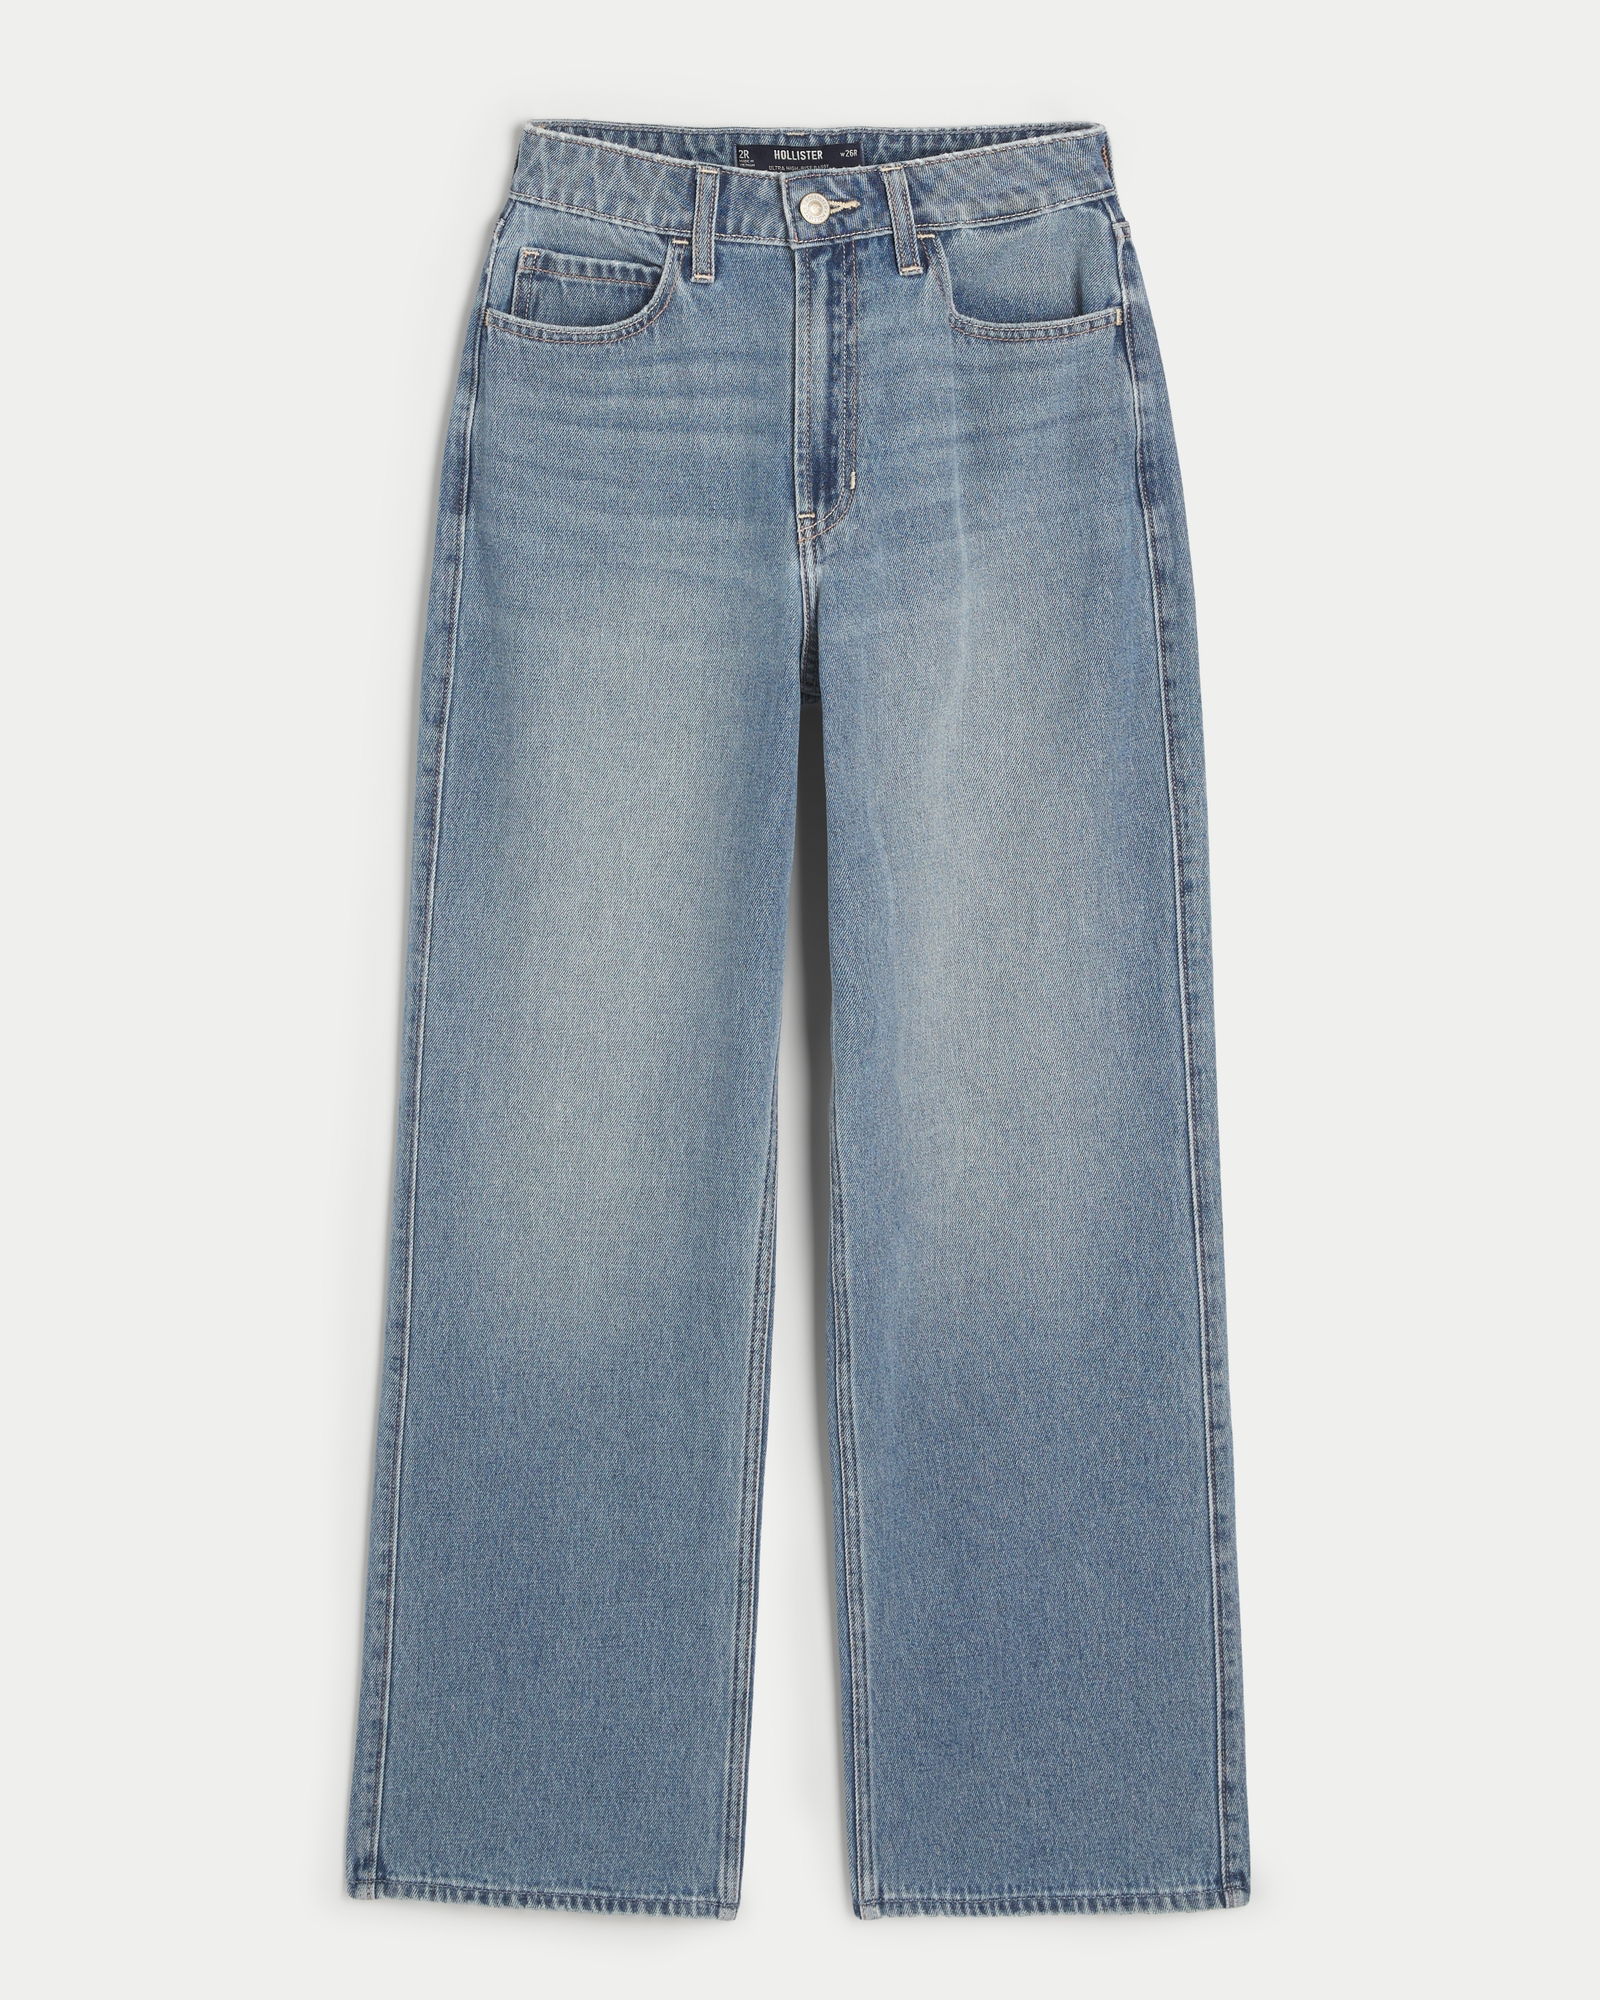 Women's Ultra High-Rise Medium Dark Wash Baggy Jeans